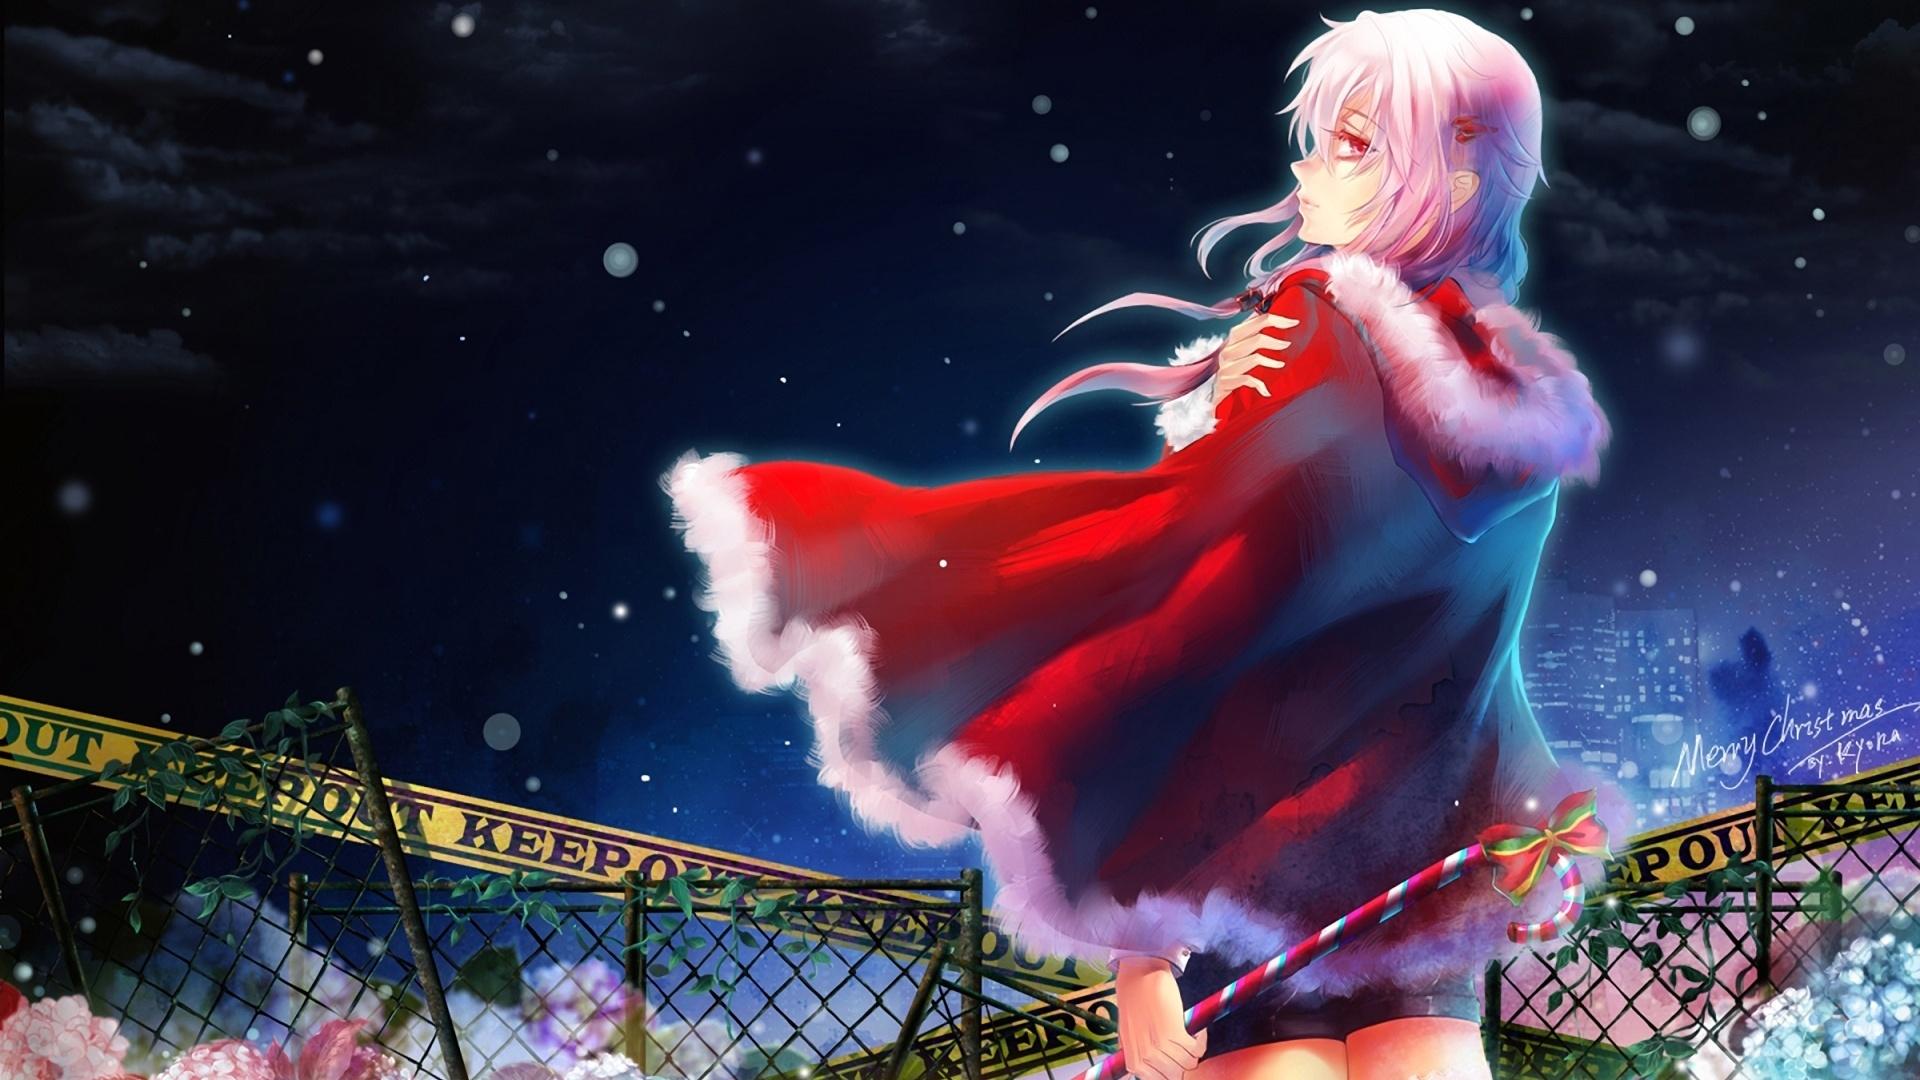 Free download Cute Anime Girl Christmas Wallpaper HD